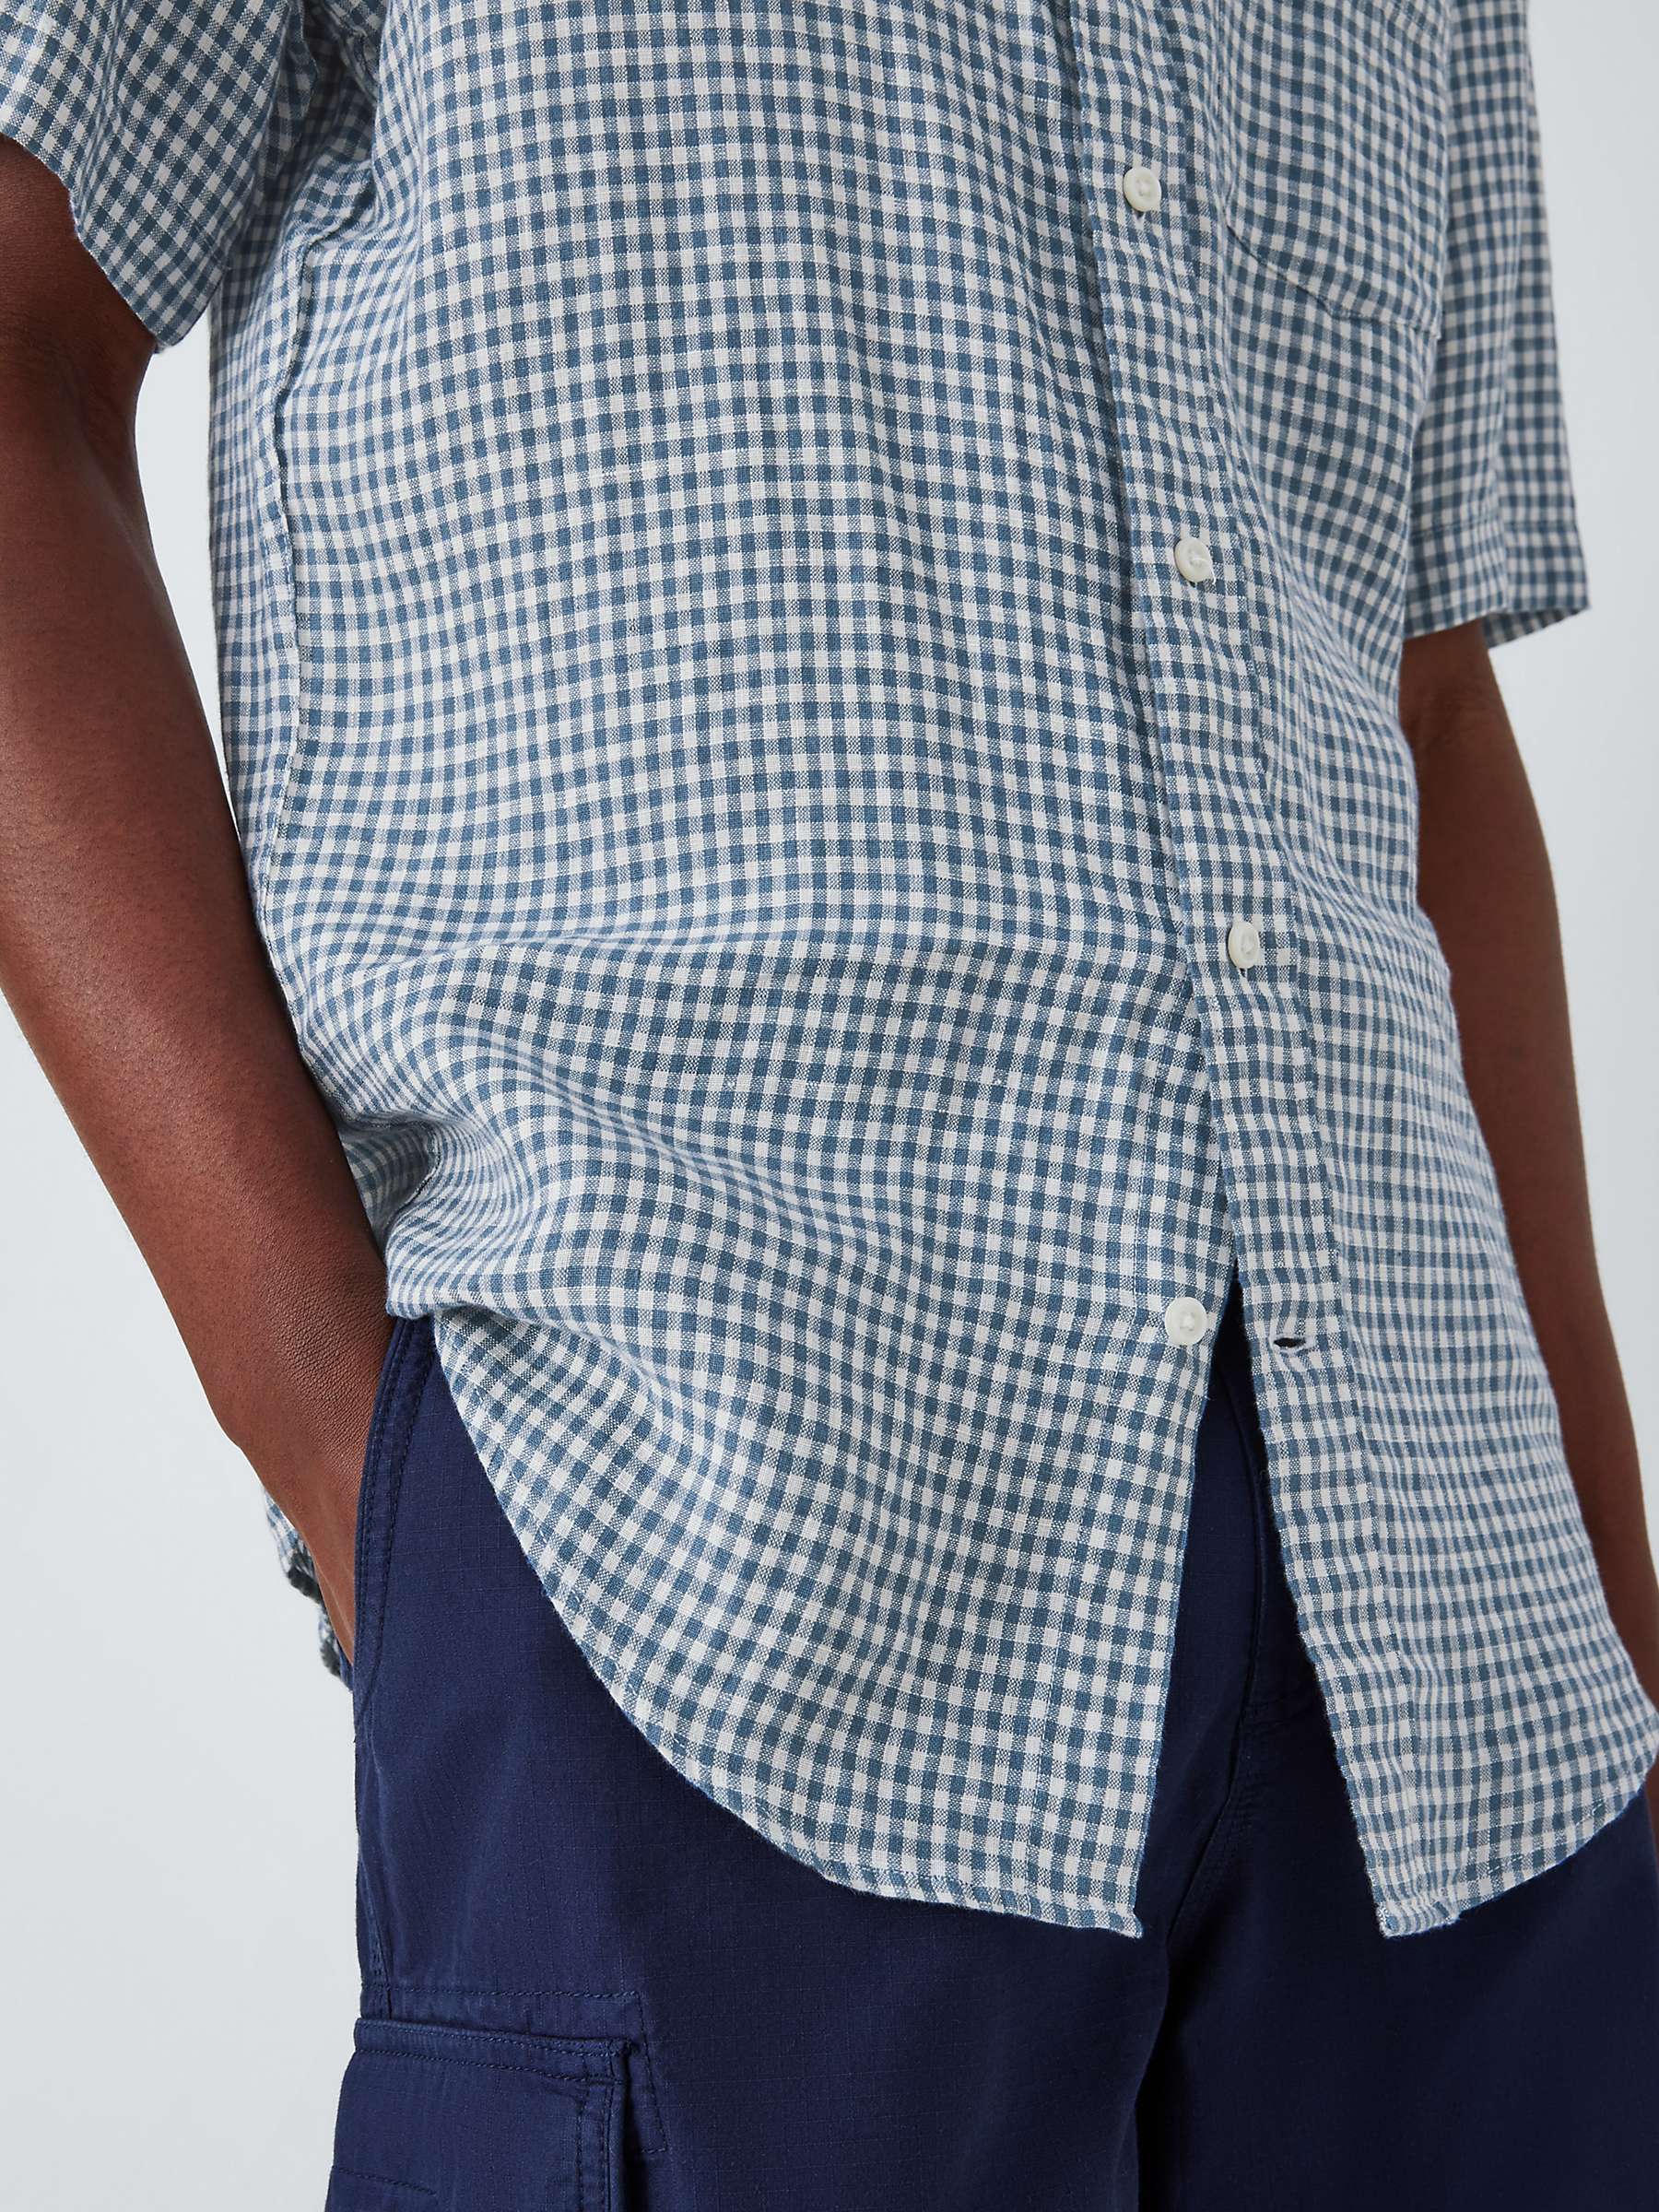 Buy John Lewis Linen Short Sleeve Gingham Shirt, Blue Online at johnlewis.com